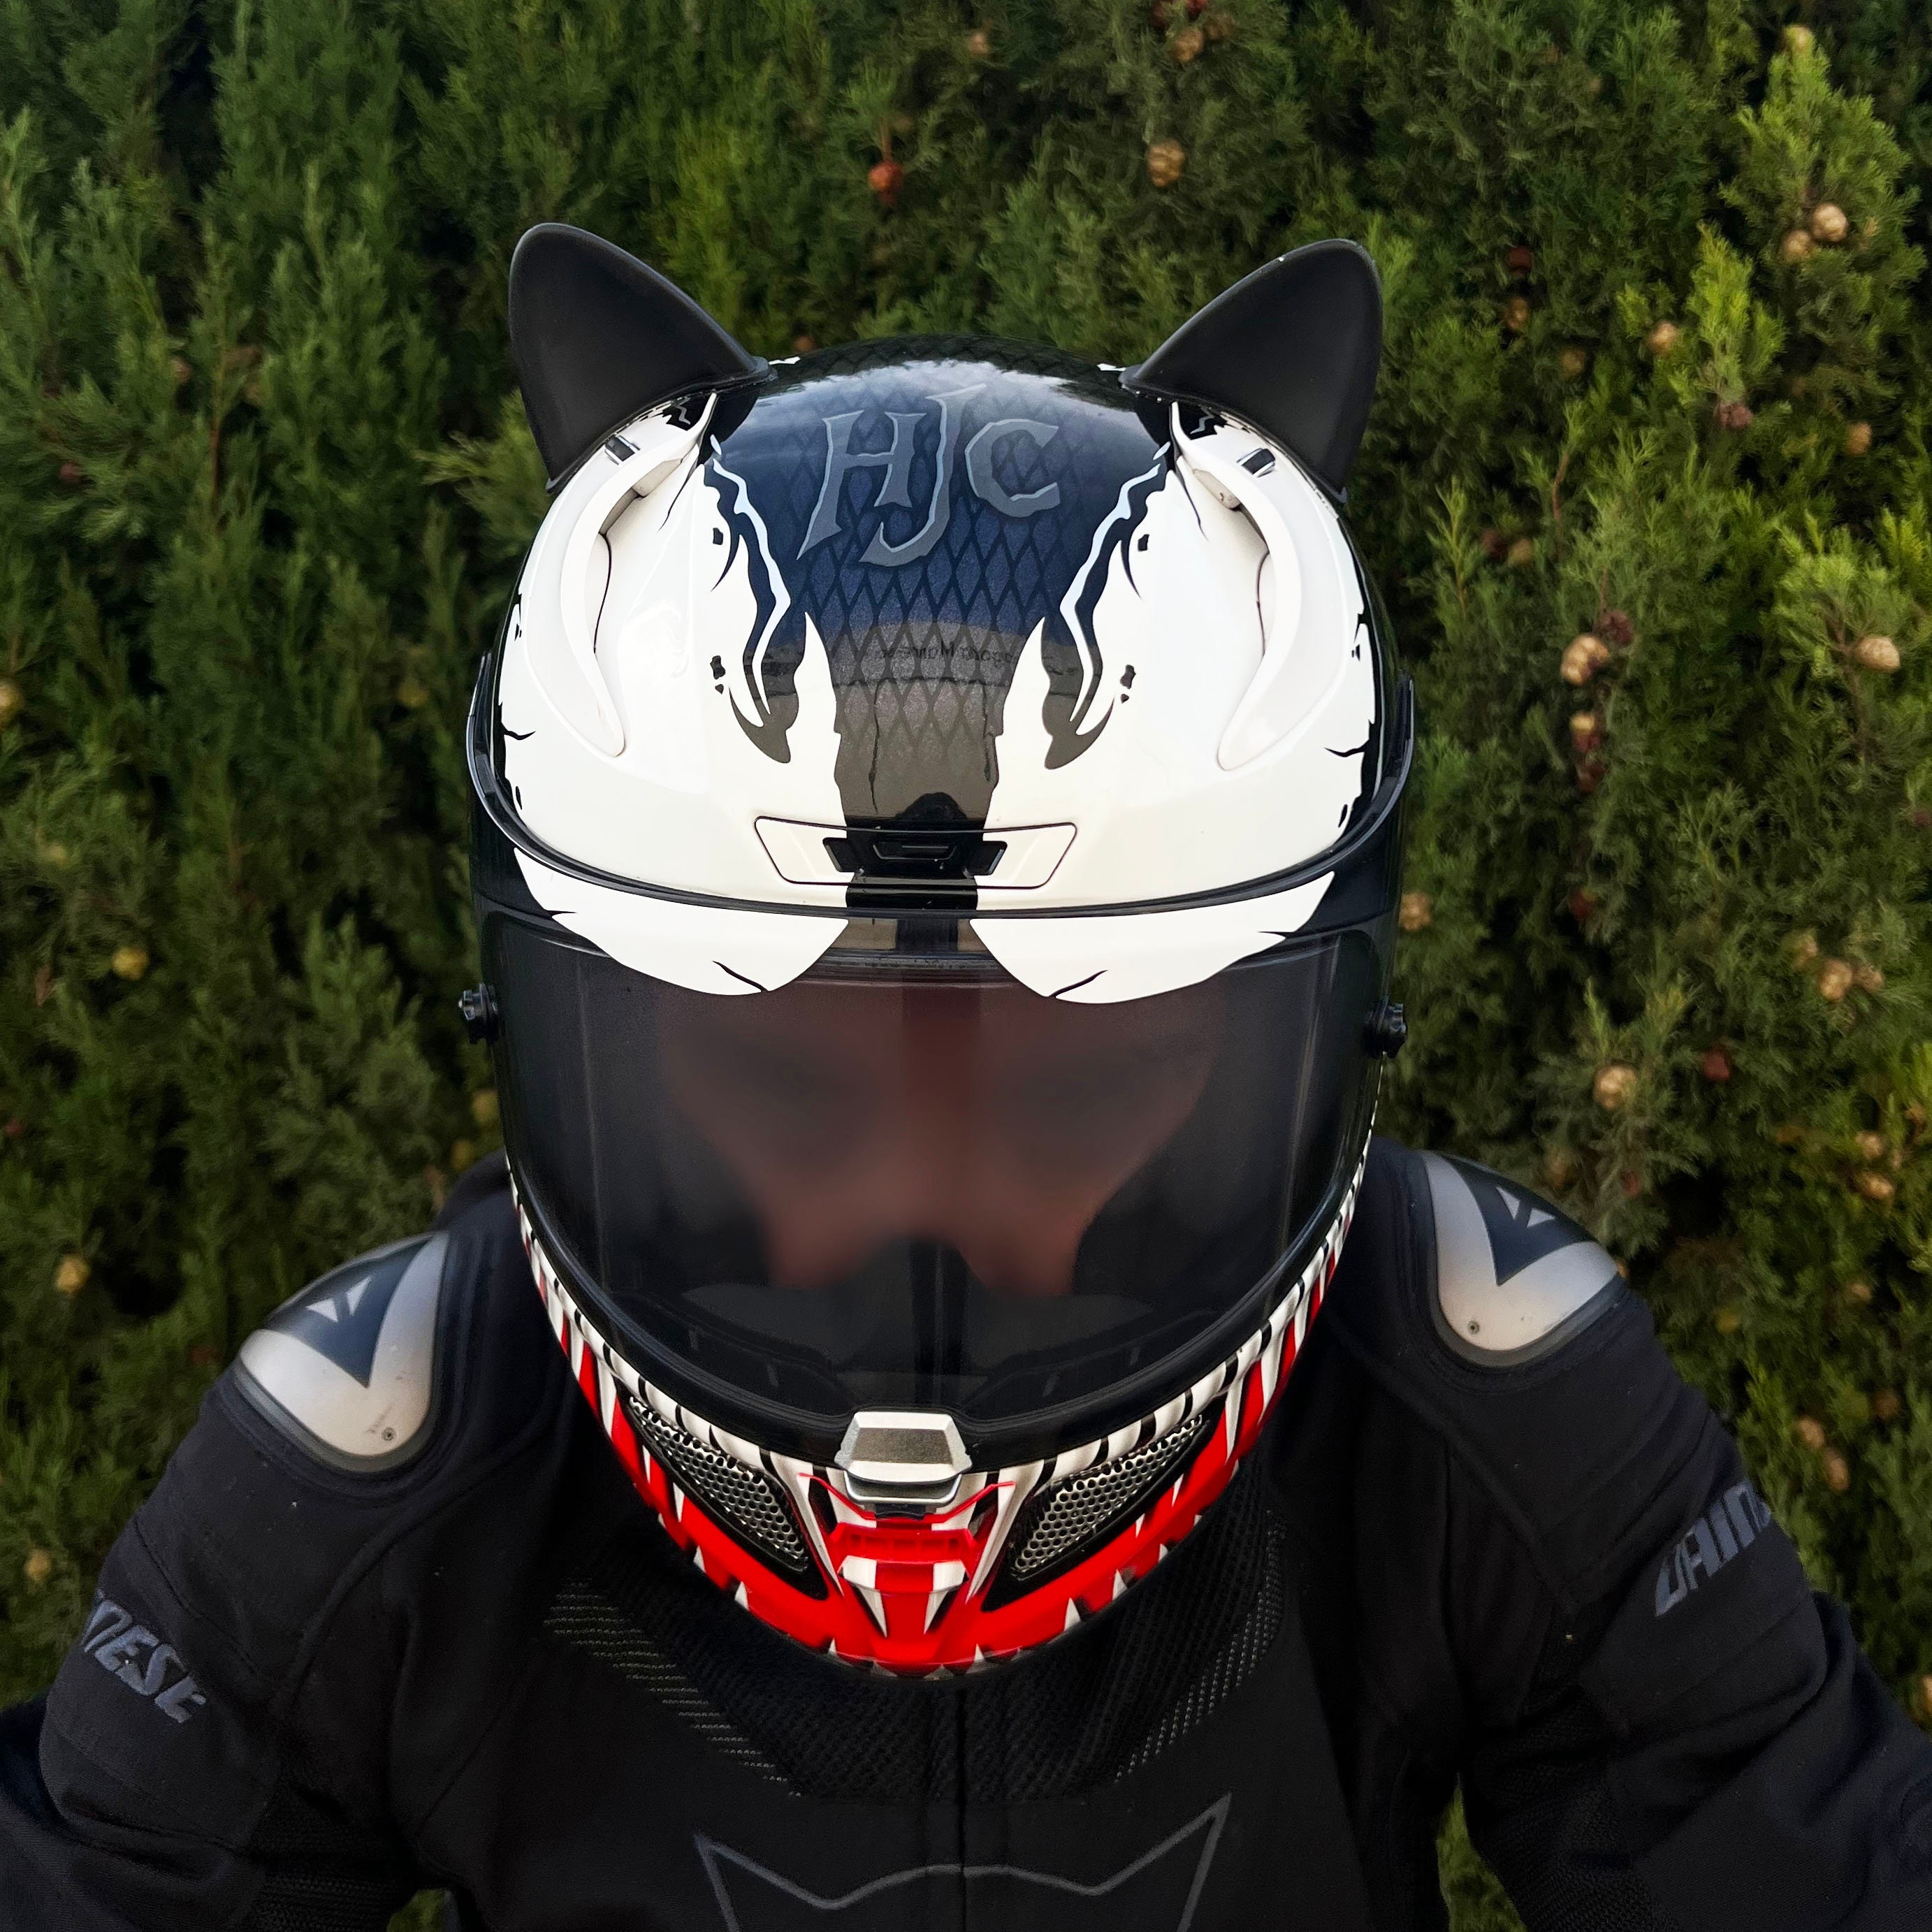 WCL Raider Full Face Motorcycle Helmet - Drop Down Tinted Visor